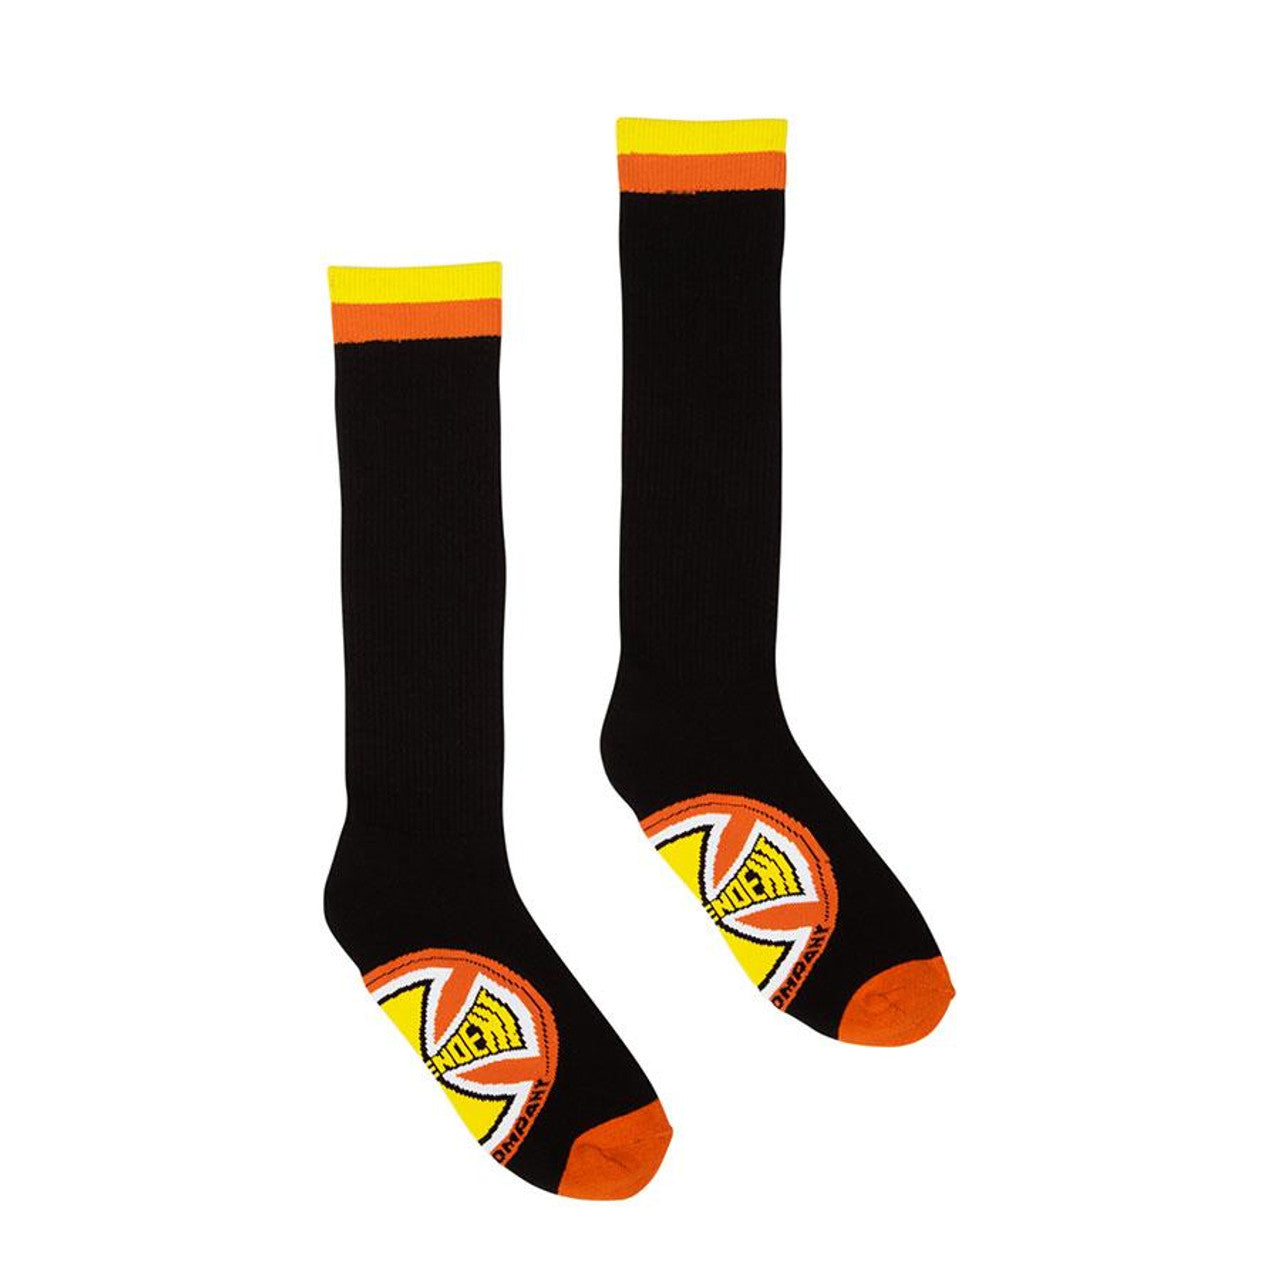 Independent Chroma Socks